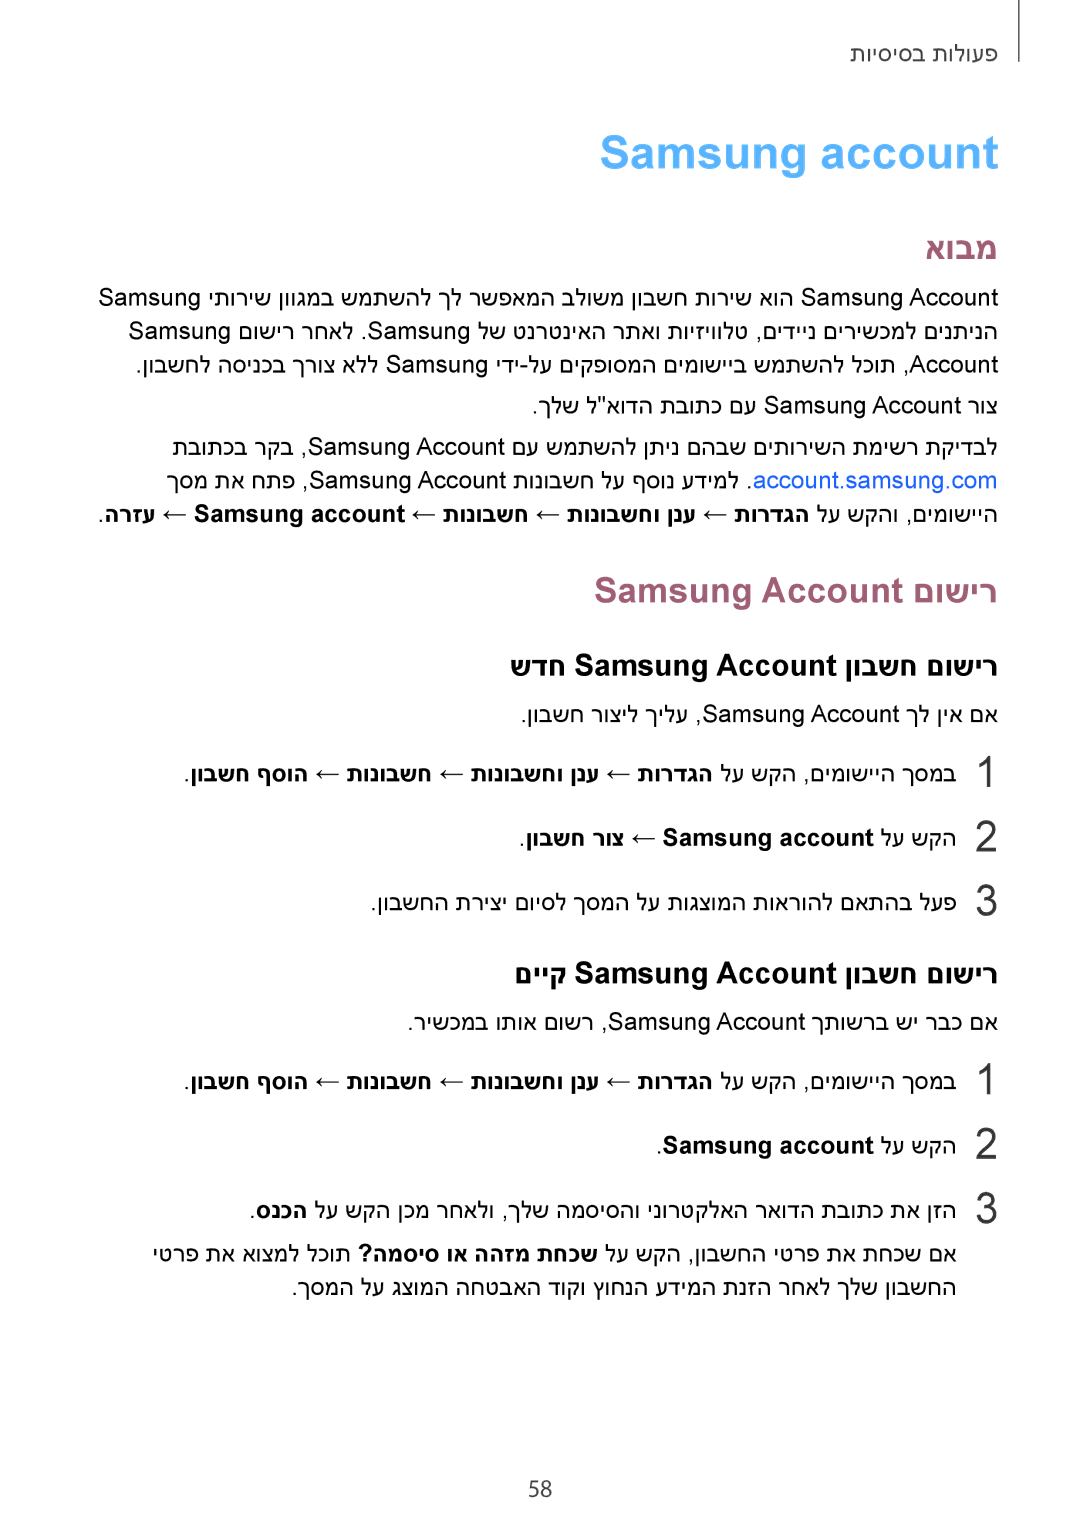 Samsung SM-G935FZKAILO, SM-G935FZDAILO manual Samsung account, Samsung Account םושיר, שדח Samsung Account ןובשח םושיר 